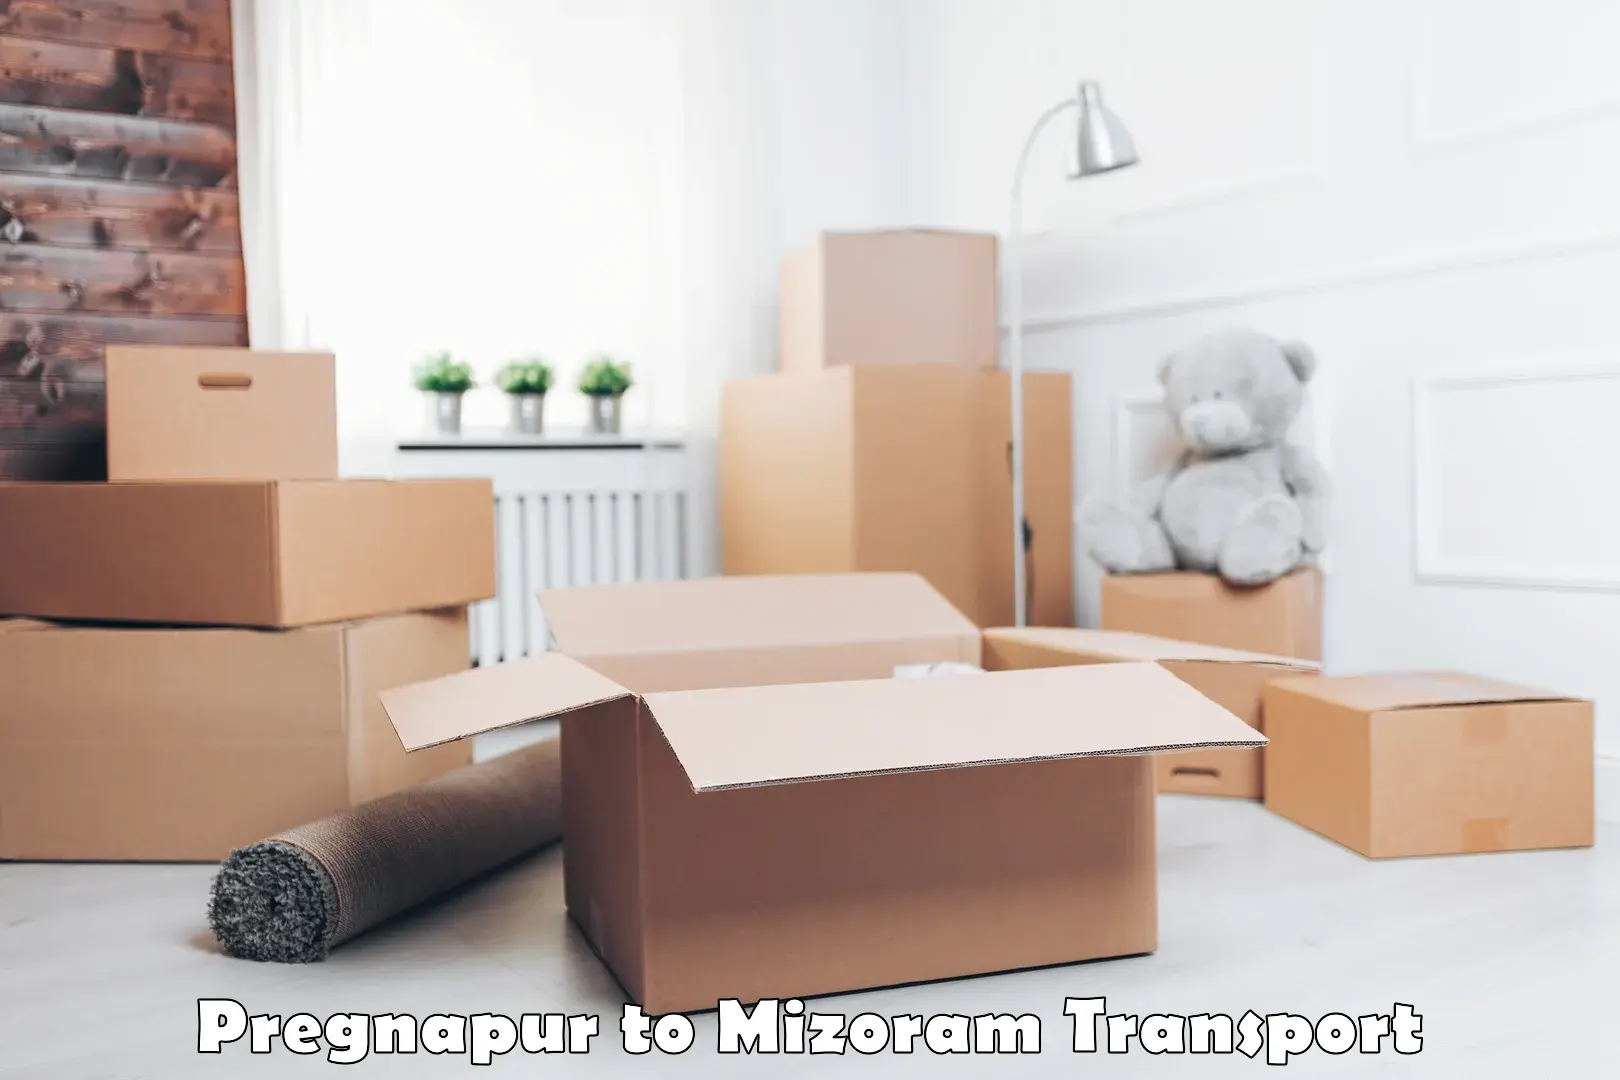 Pick up transport service Pregnapur to Mizoram